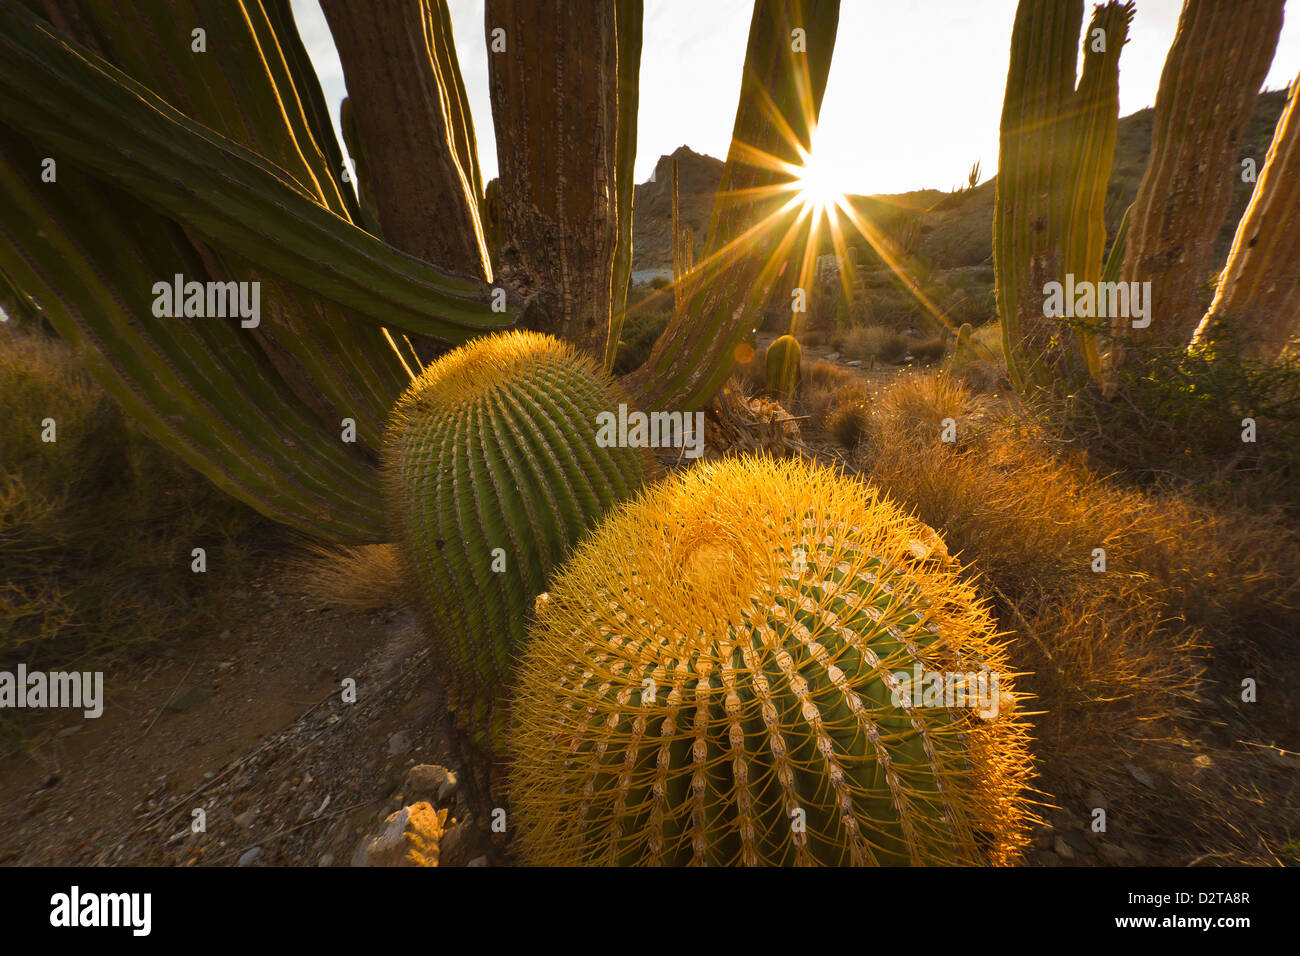 Endemische Riesen Barrel Cactus, Isla Santa Catalina, Golf von Kalifornien (Sea of Cortez), Baja California Sur, Mexiko Stockfoto